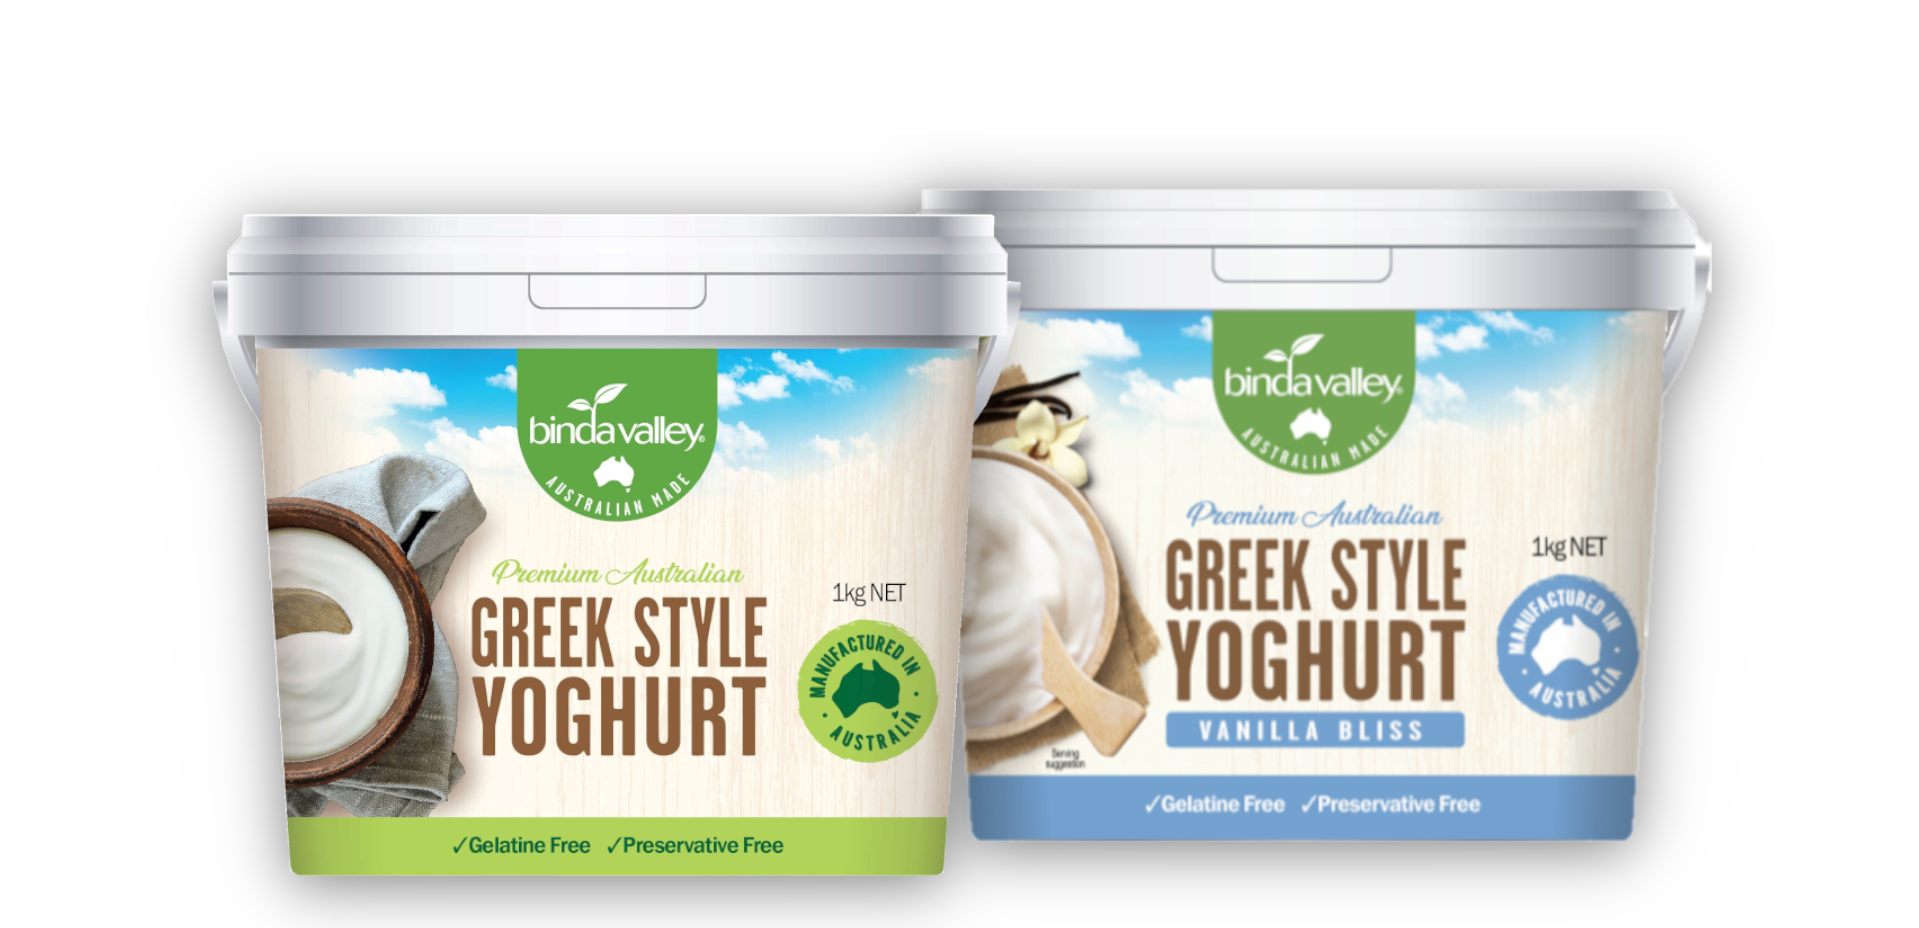 Binda Valley Greek Style Yoghurt Natural and Vanilla Bliss